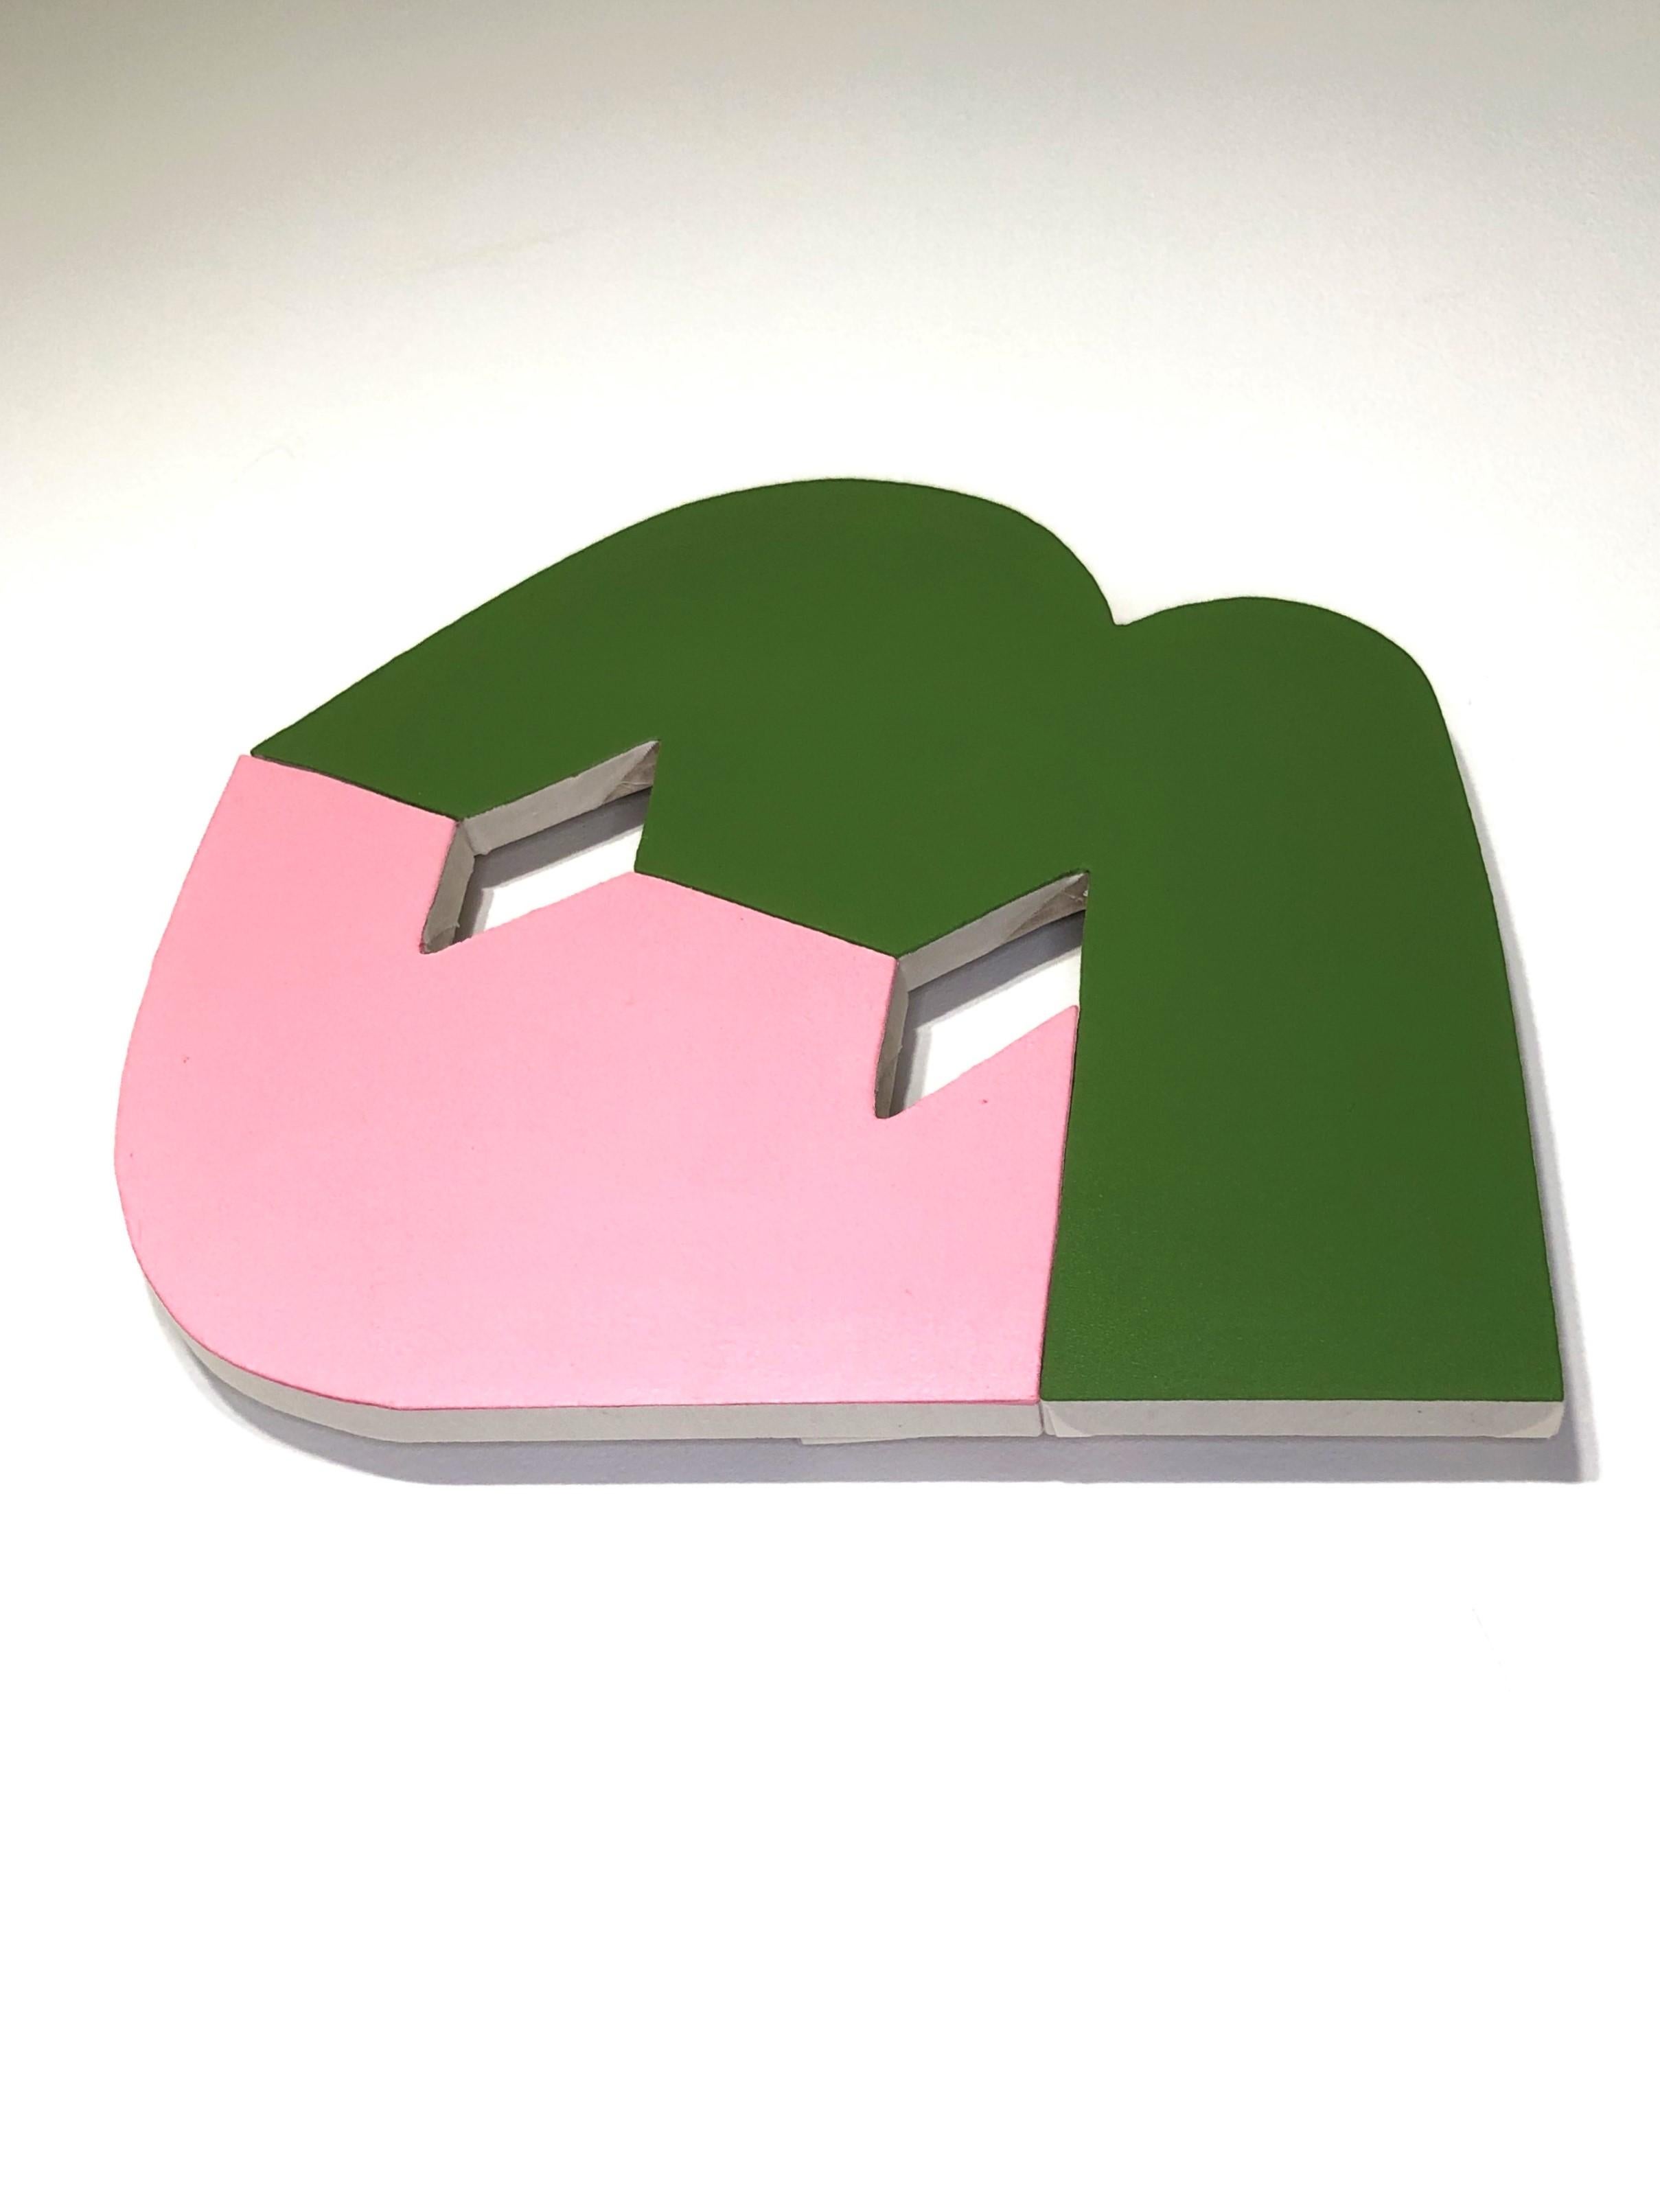 Peinture murale technique mixte « 21-8 » - rose, vert, minimalisme, audacieuse, petite - Sculpture de Jason Matherly